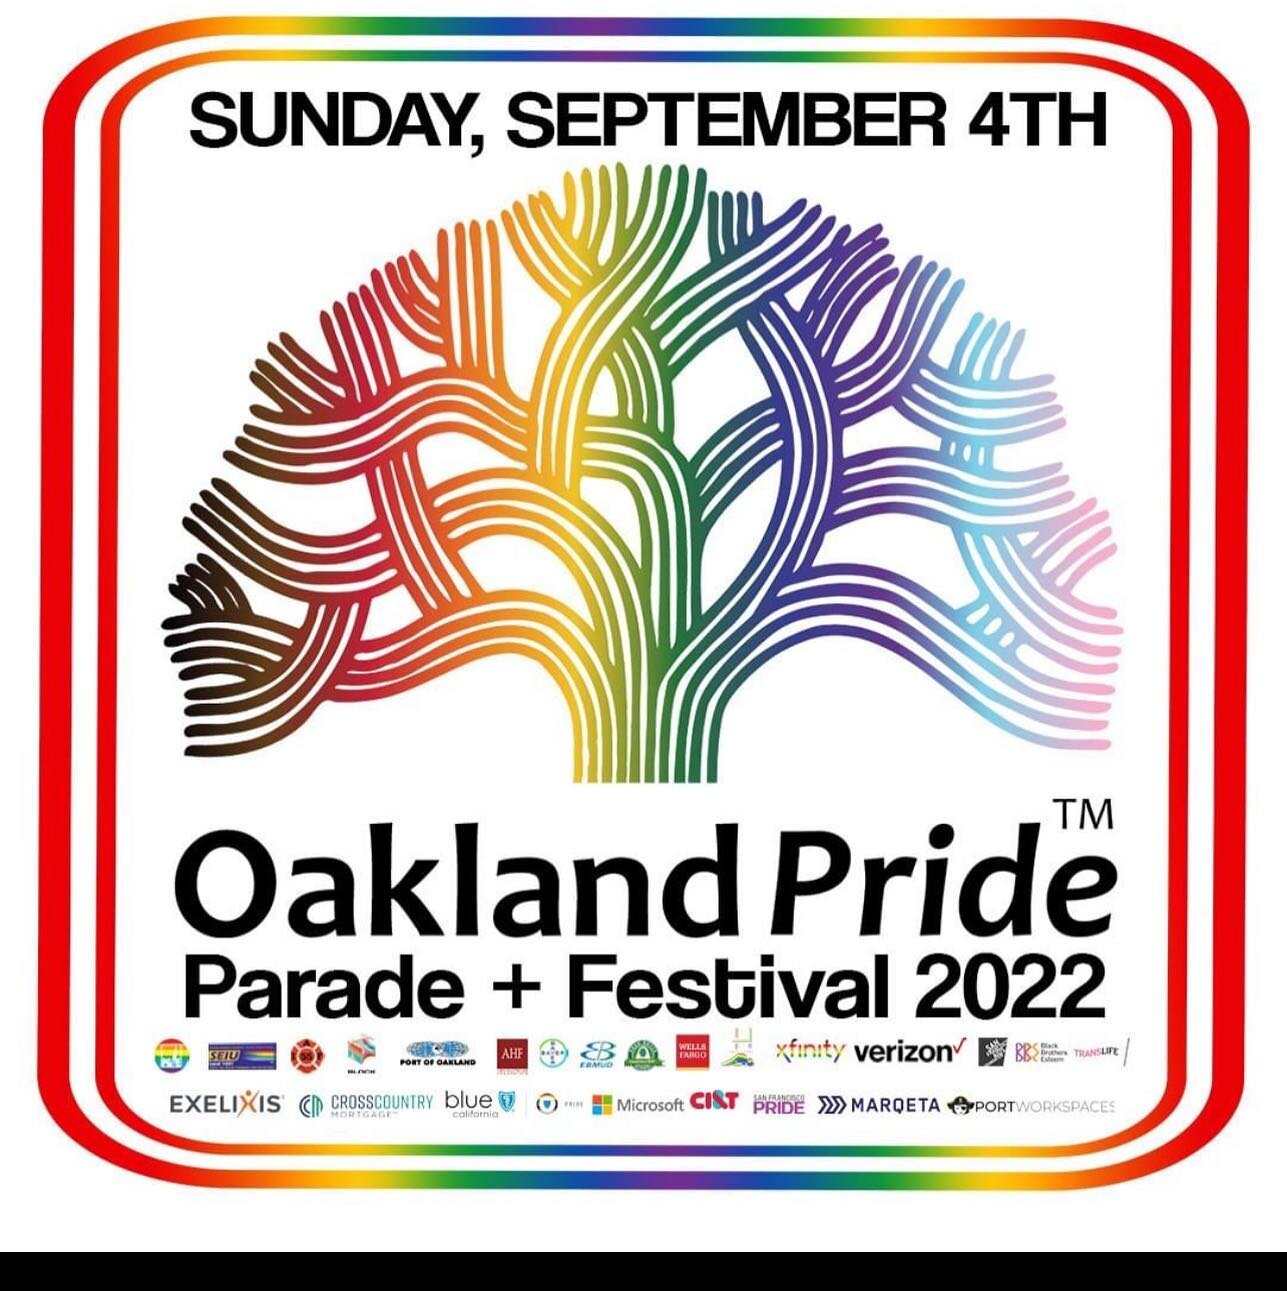 Save the Date 9/4/22 @oaklandpride22 🌳 #PrideinOakland #Oakland #TownBusiness #OaklandsOwn #AuthenticOakland